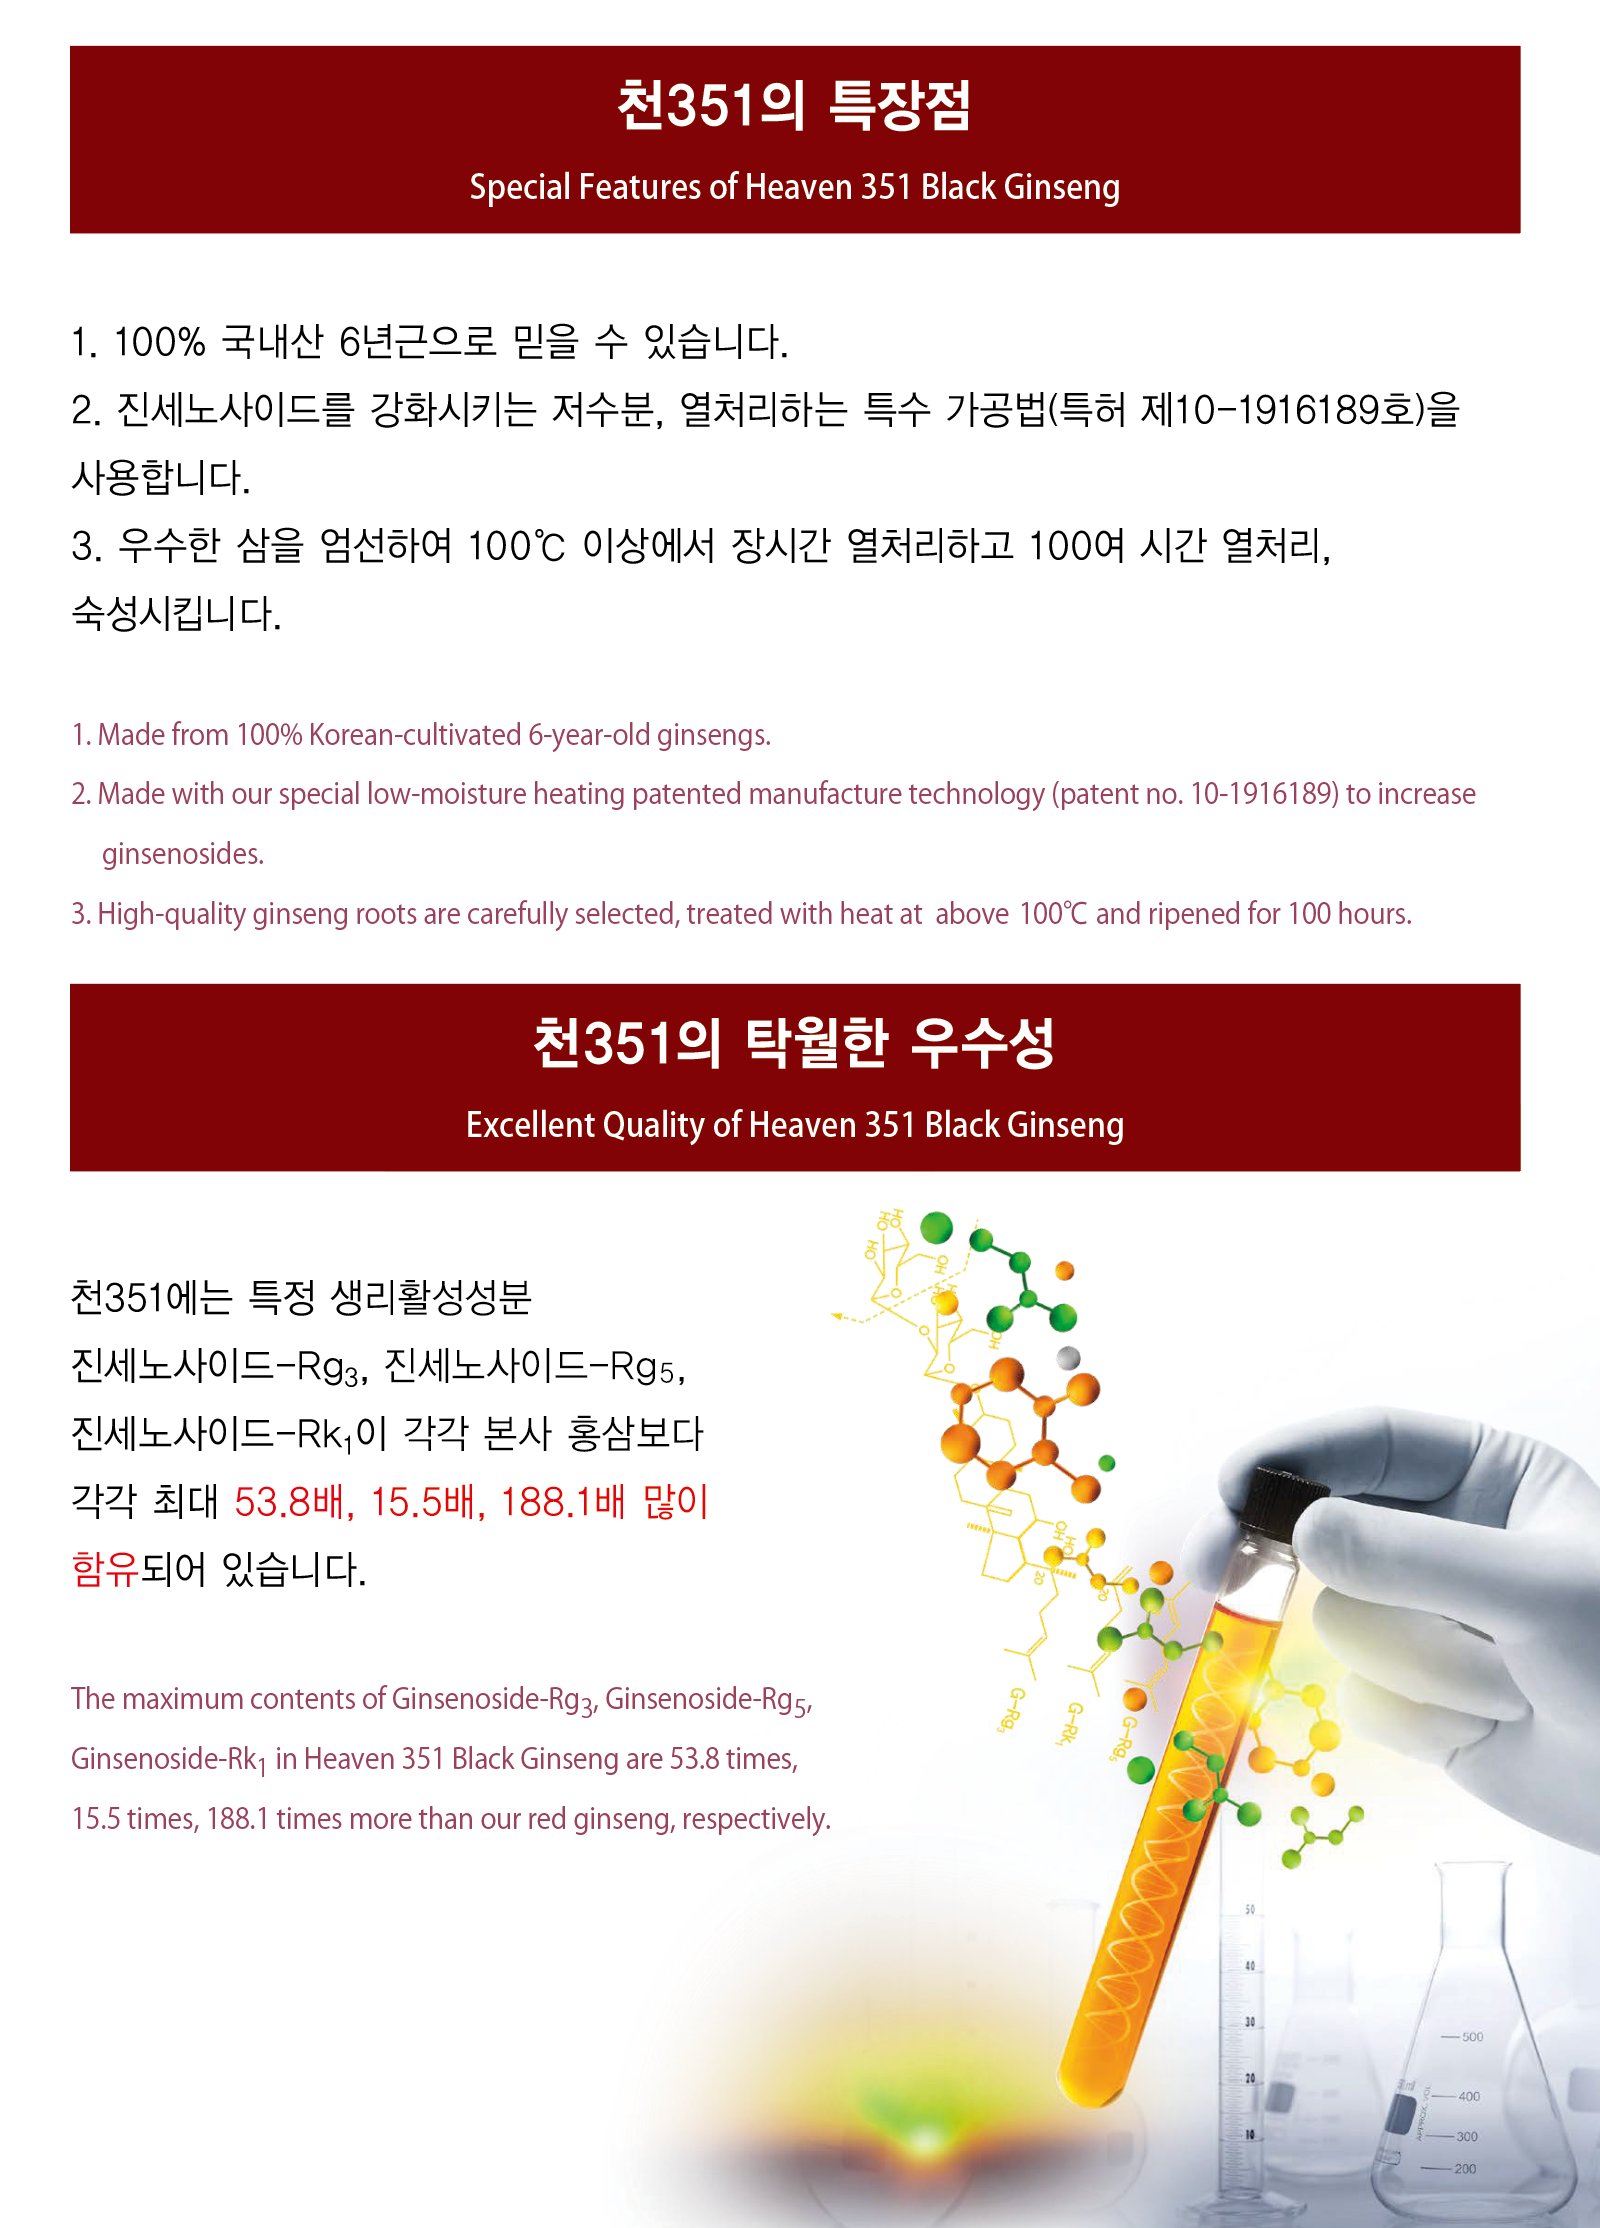 Heaven Grade 351 Black Ginseng Everyday 10ml 30 Sachets Extracts Drink Liquid Tea Premium Korean 6 Years Old Health Supplements Foods Gifts